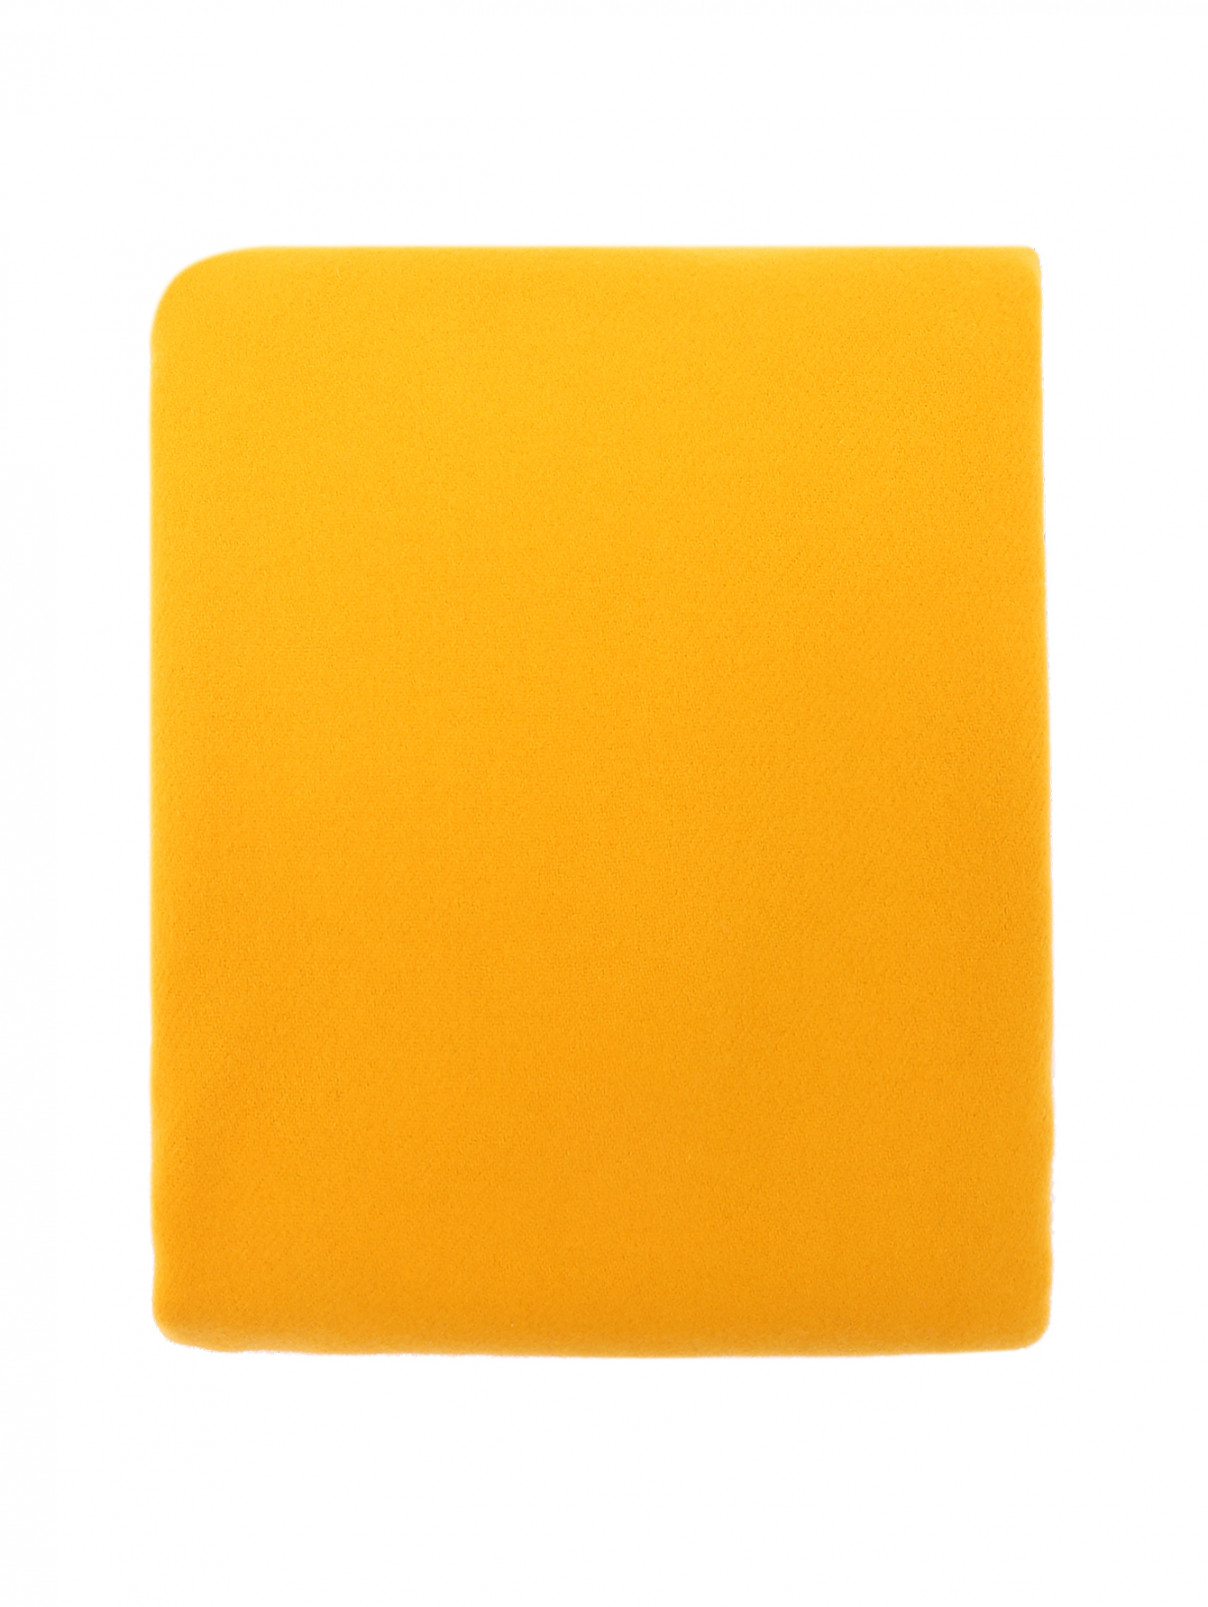 Шарф из шерсти с бахромой Weekend Max Mara  –  Общий вид  – Цвет:  Желтый